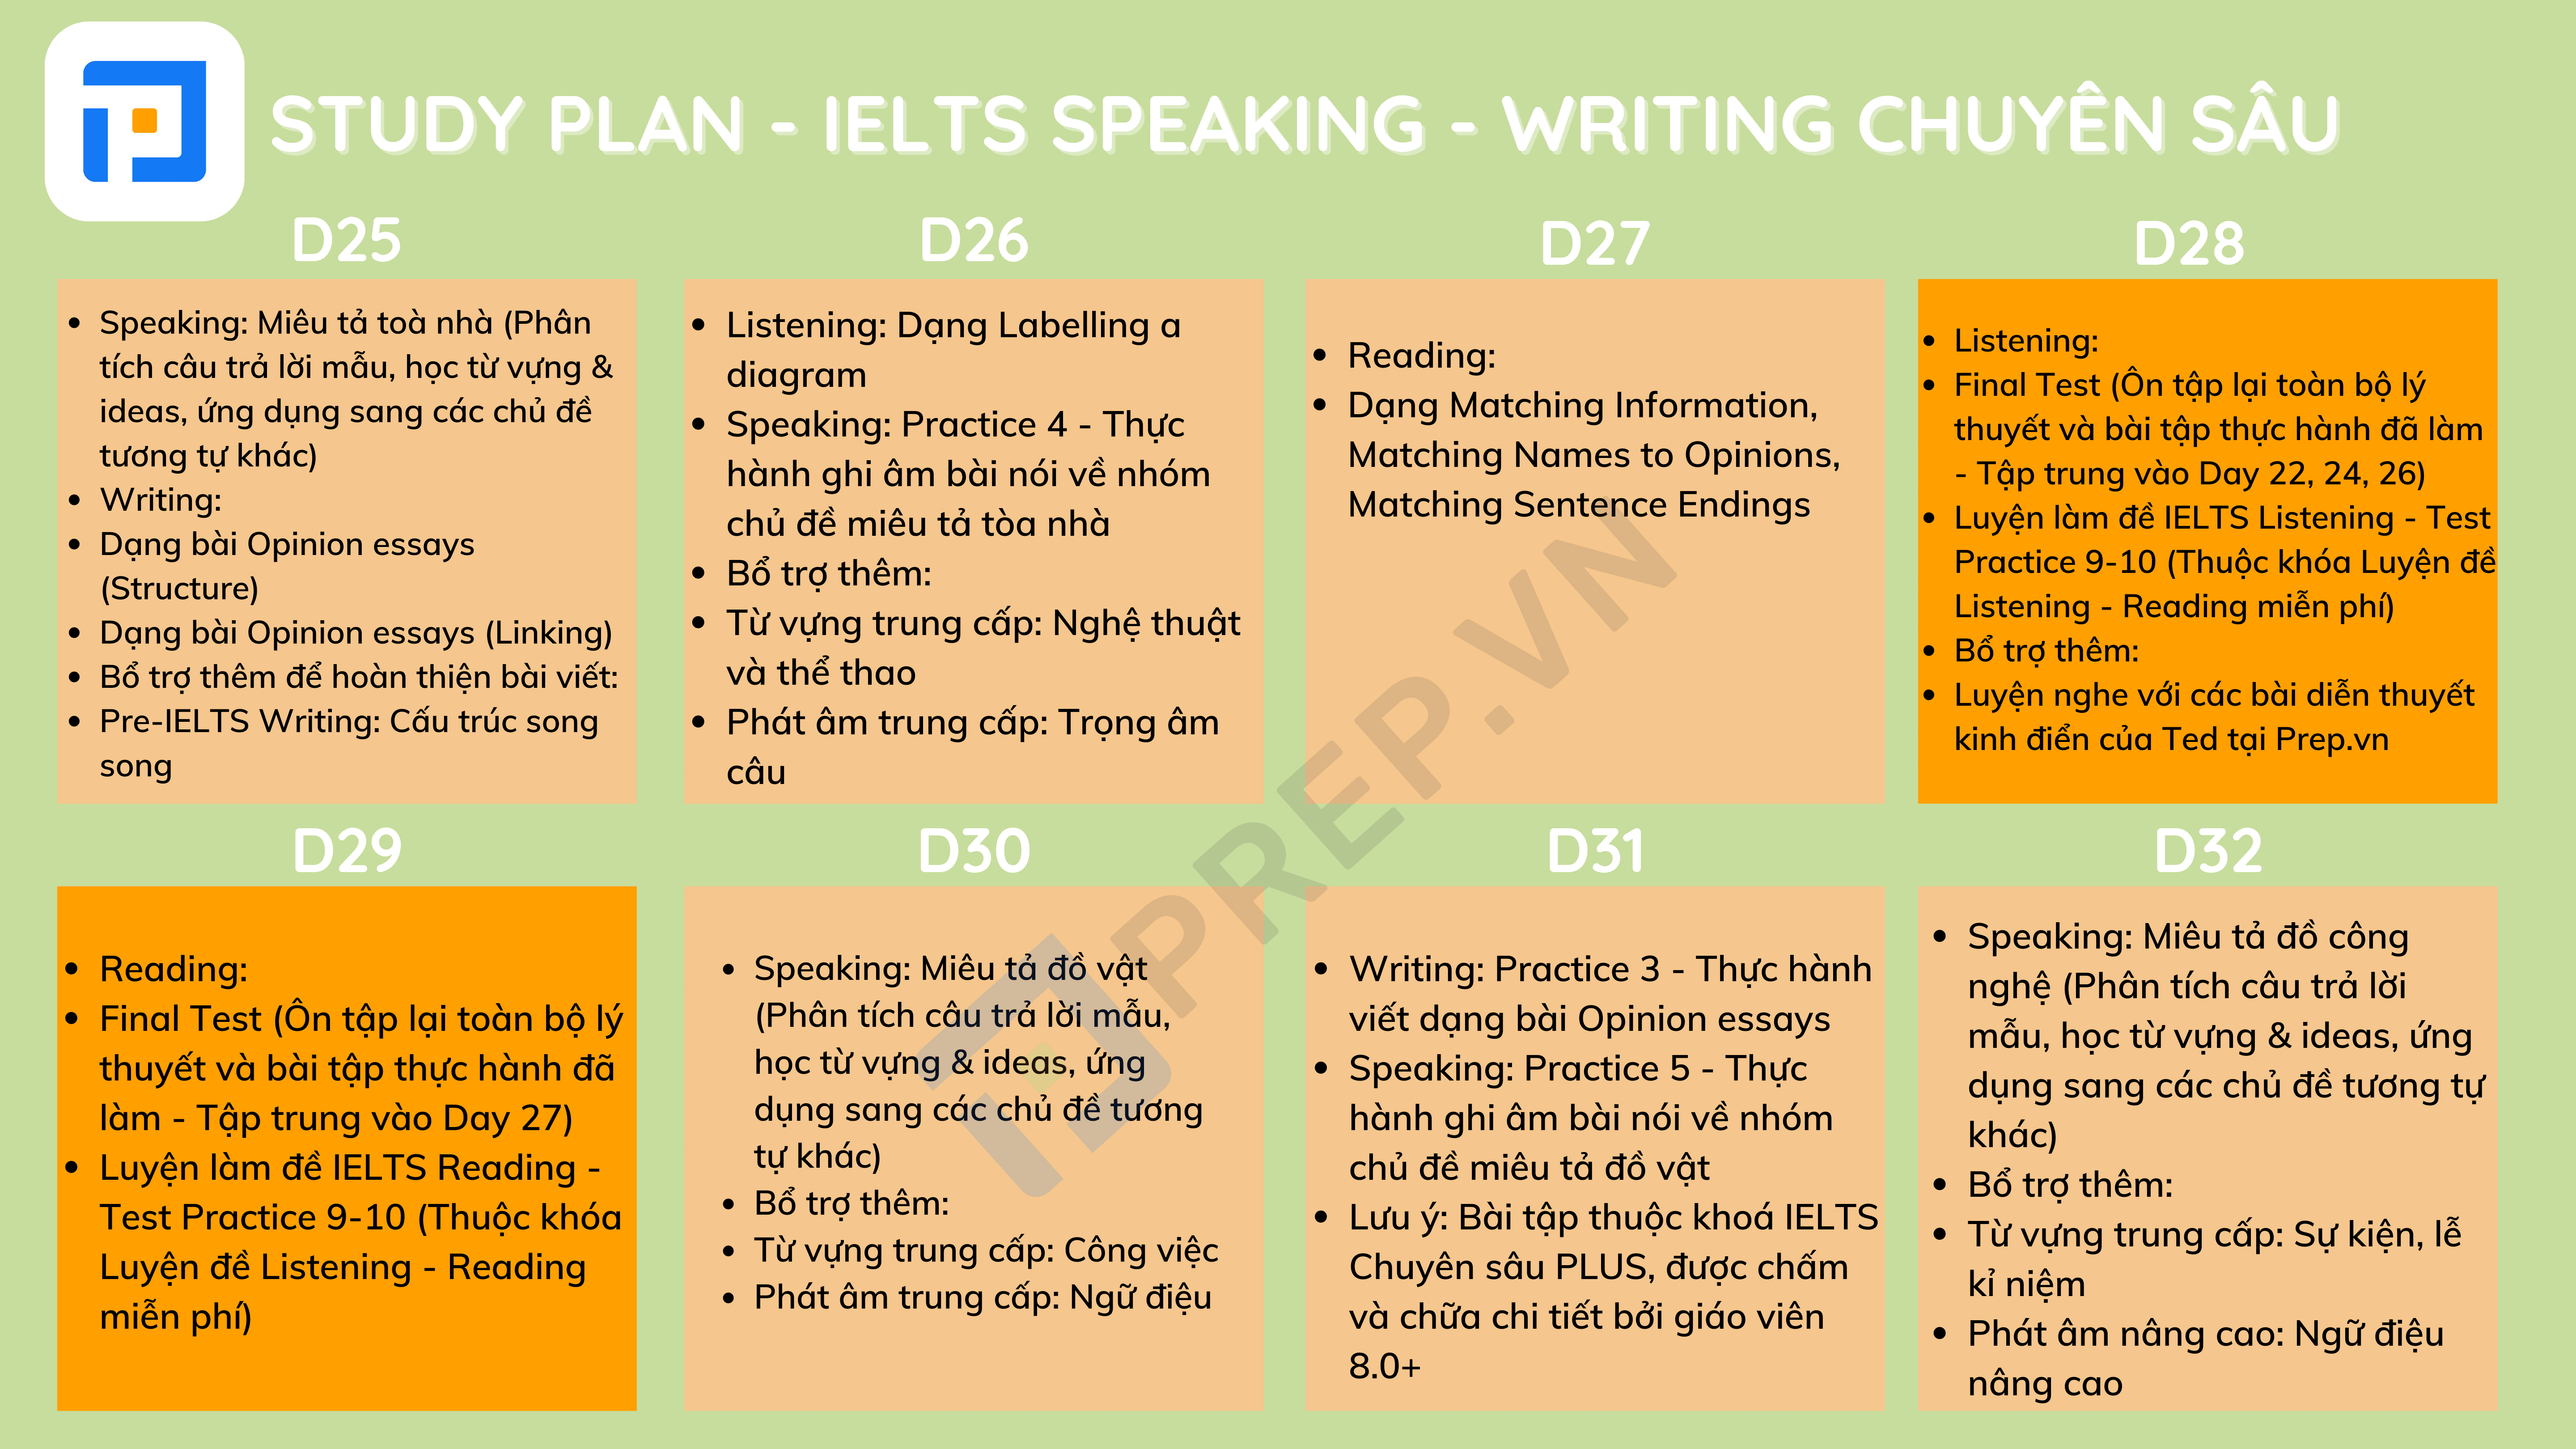 Study Plan - Lộ trình học IELTS 7.0